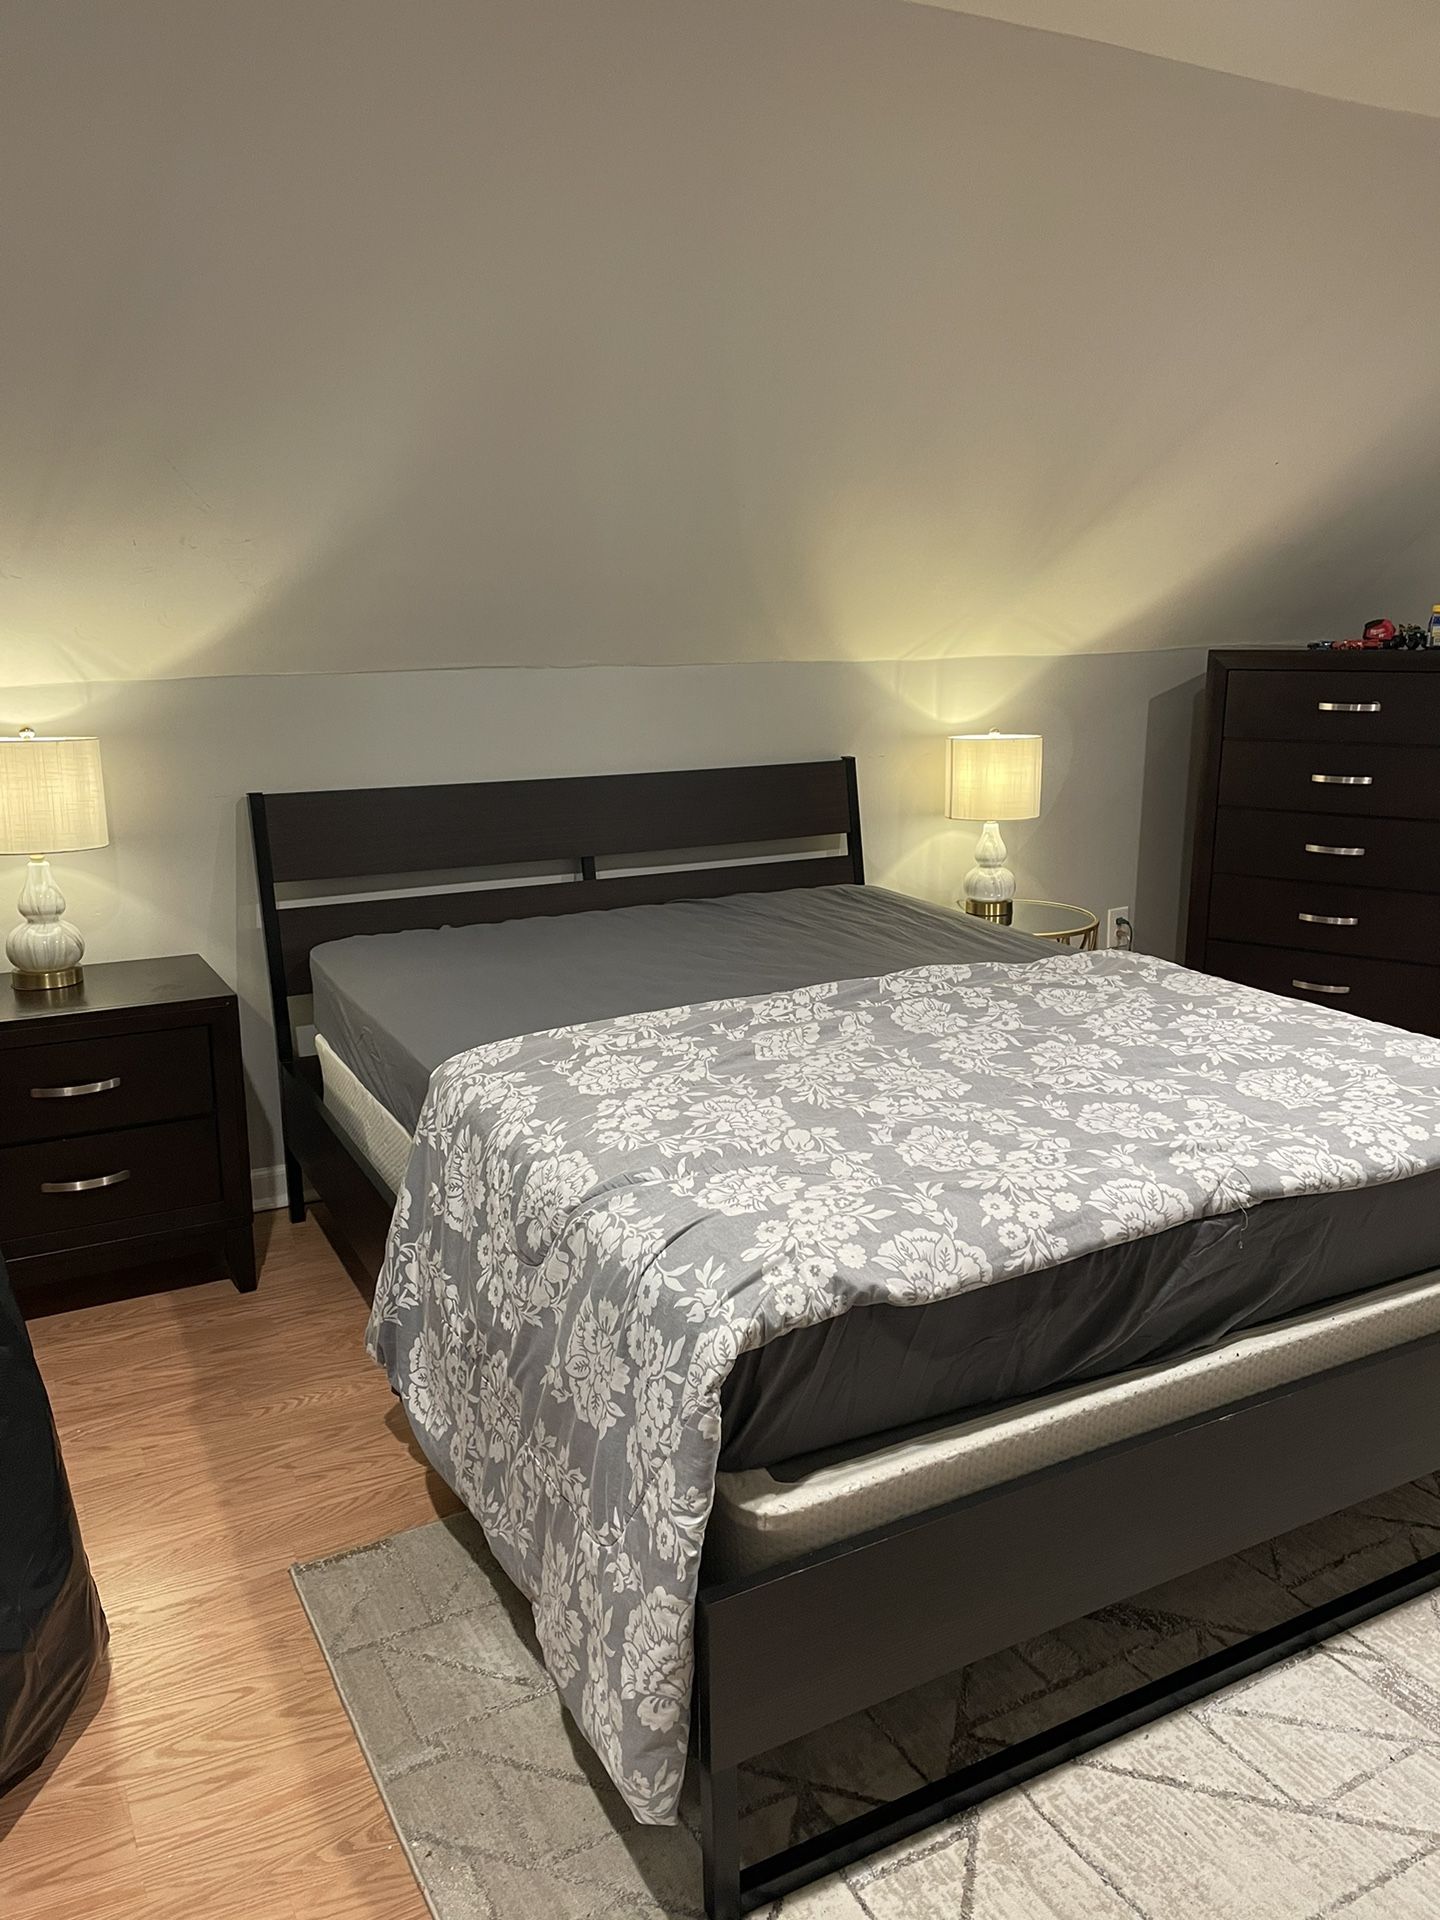 4 Piece Queen Sized Bedroom Set & Box Spring